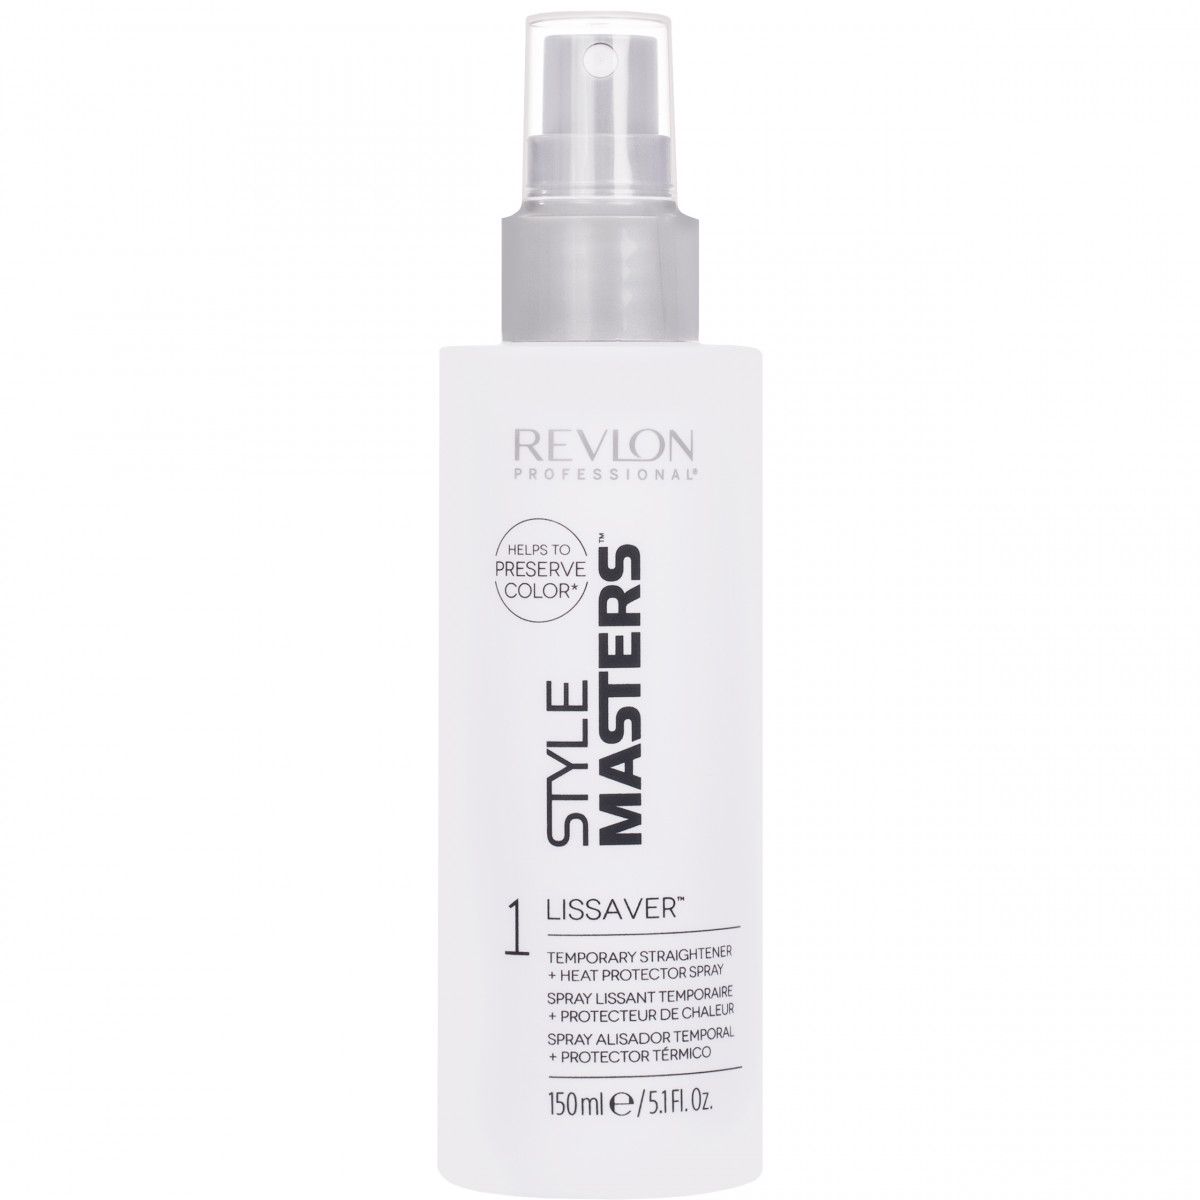 Revlon Style Masters Lissaver Temporary Straightener Spray - termoochronny spray do prostowania włosów, 150ml